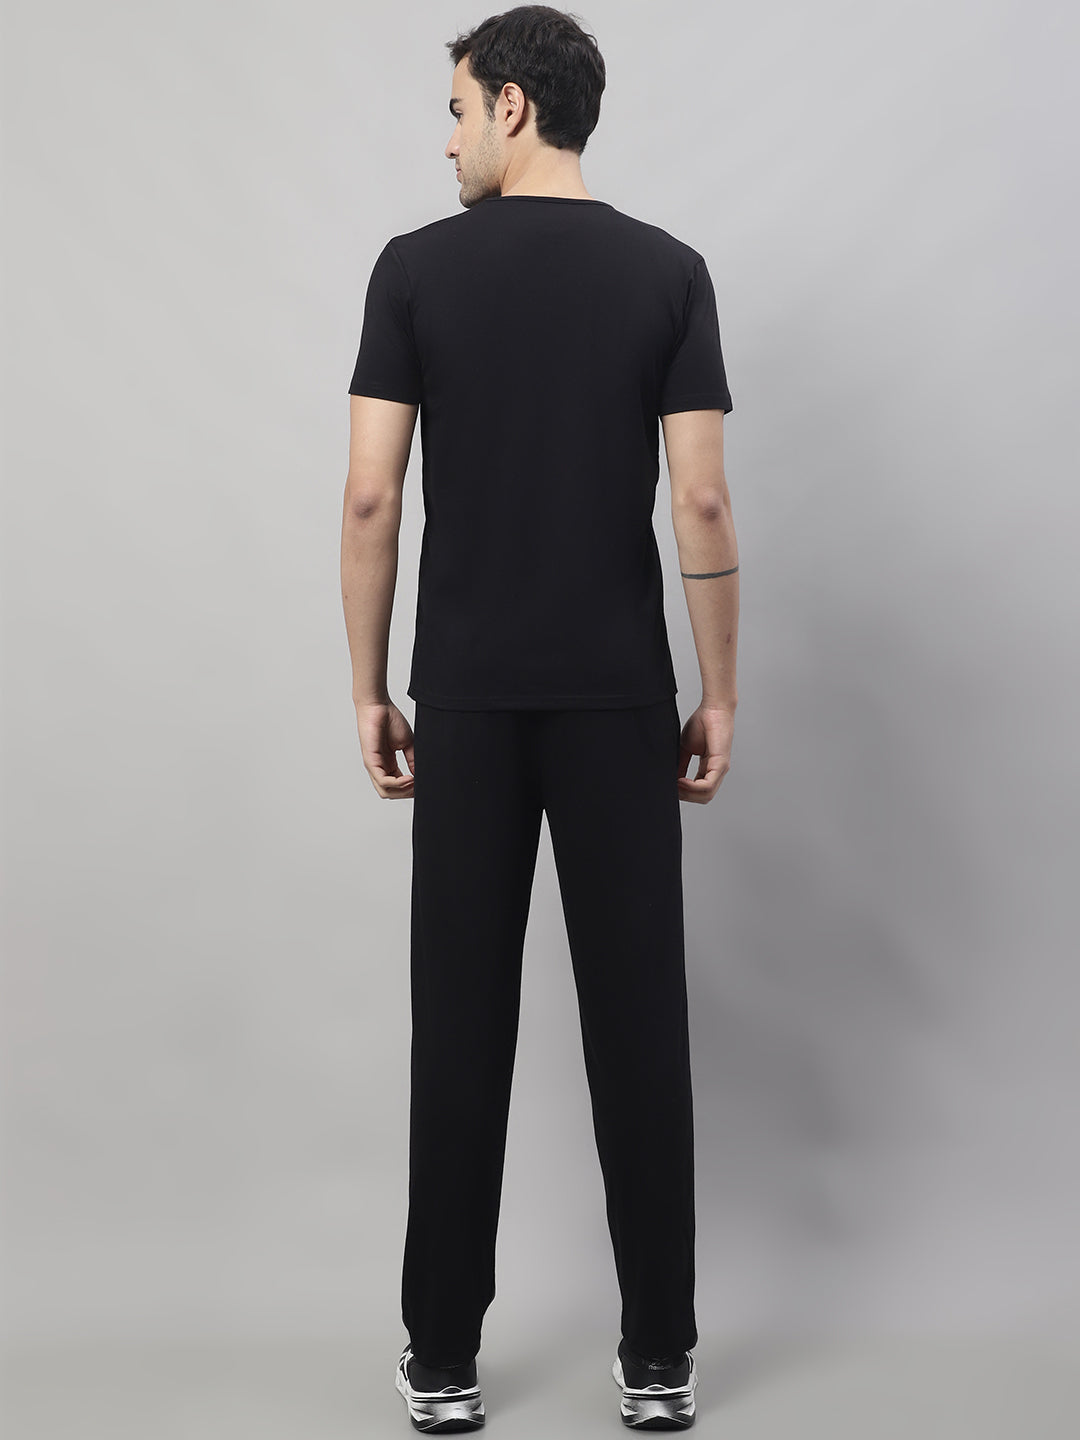 Buy VIMAL Men's Polyester Trouser Fabric, 1.2 m (Dark Grey) at Amazon.in